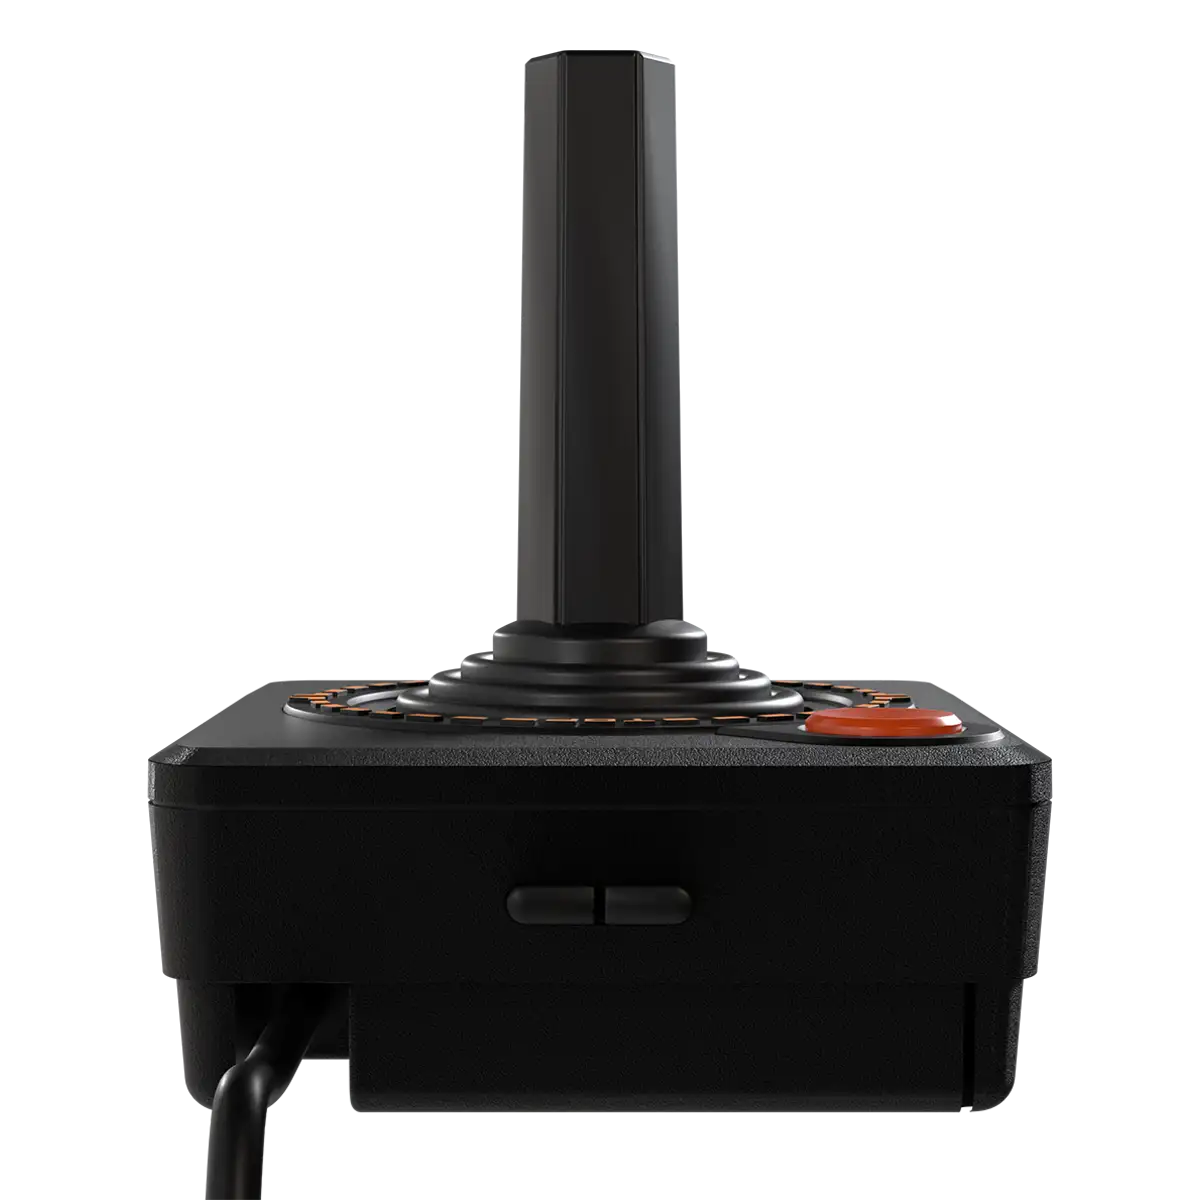 THECXSTICK (Solus Atari USB Joystick - Black) Image 9